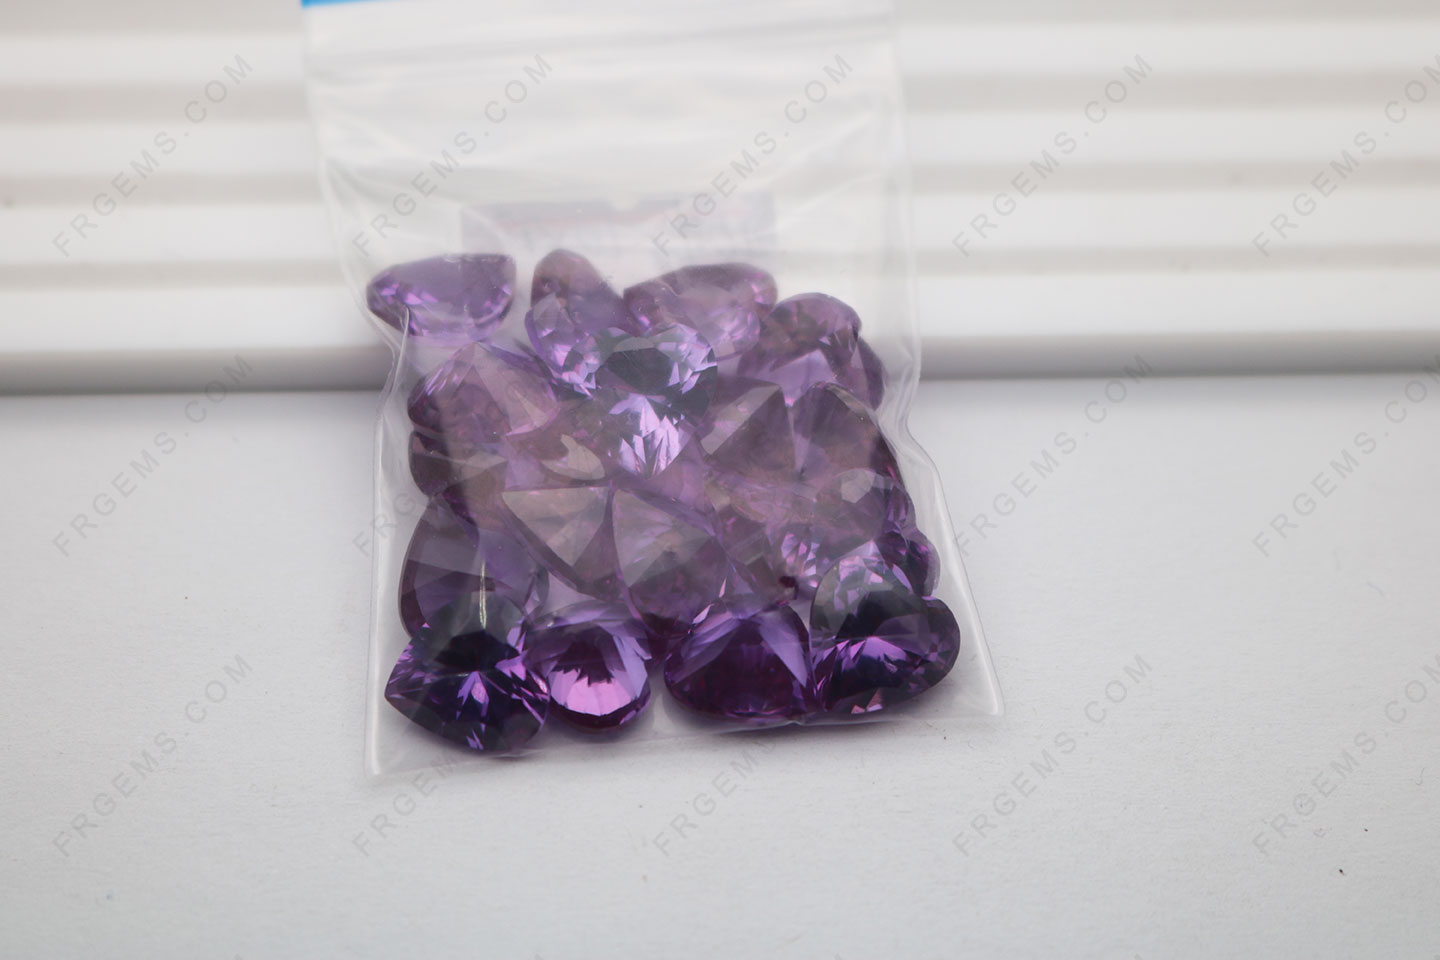 Wholesale Corundum Alexandrite Color change 46# Heart shape faceted cut 10x10mm gemstones at factory price